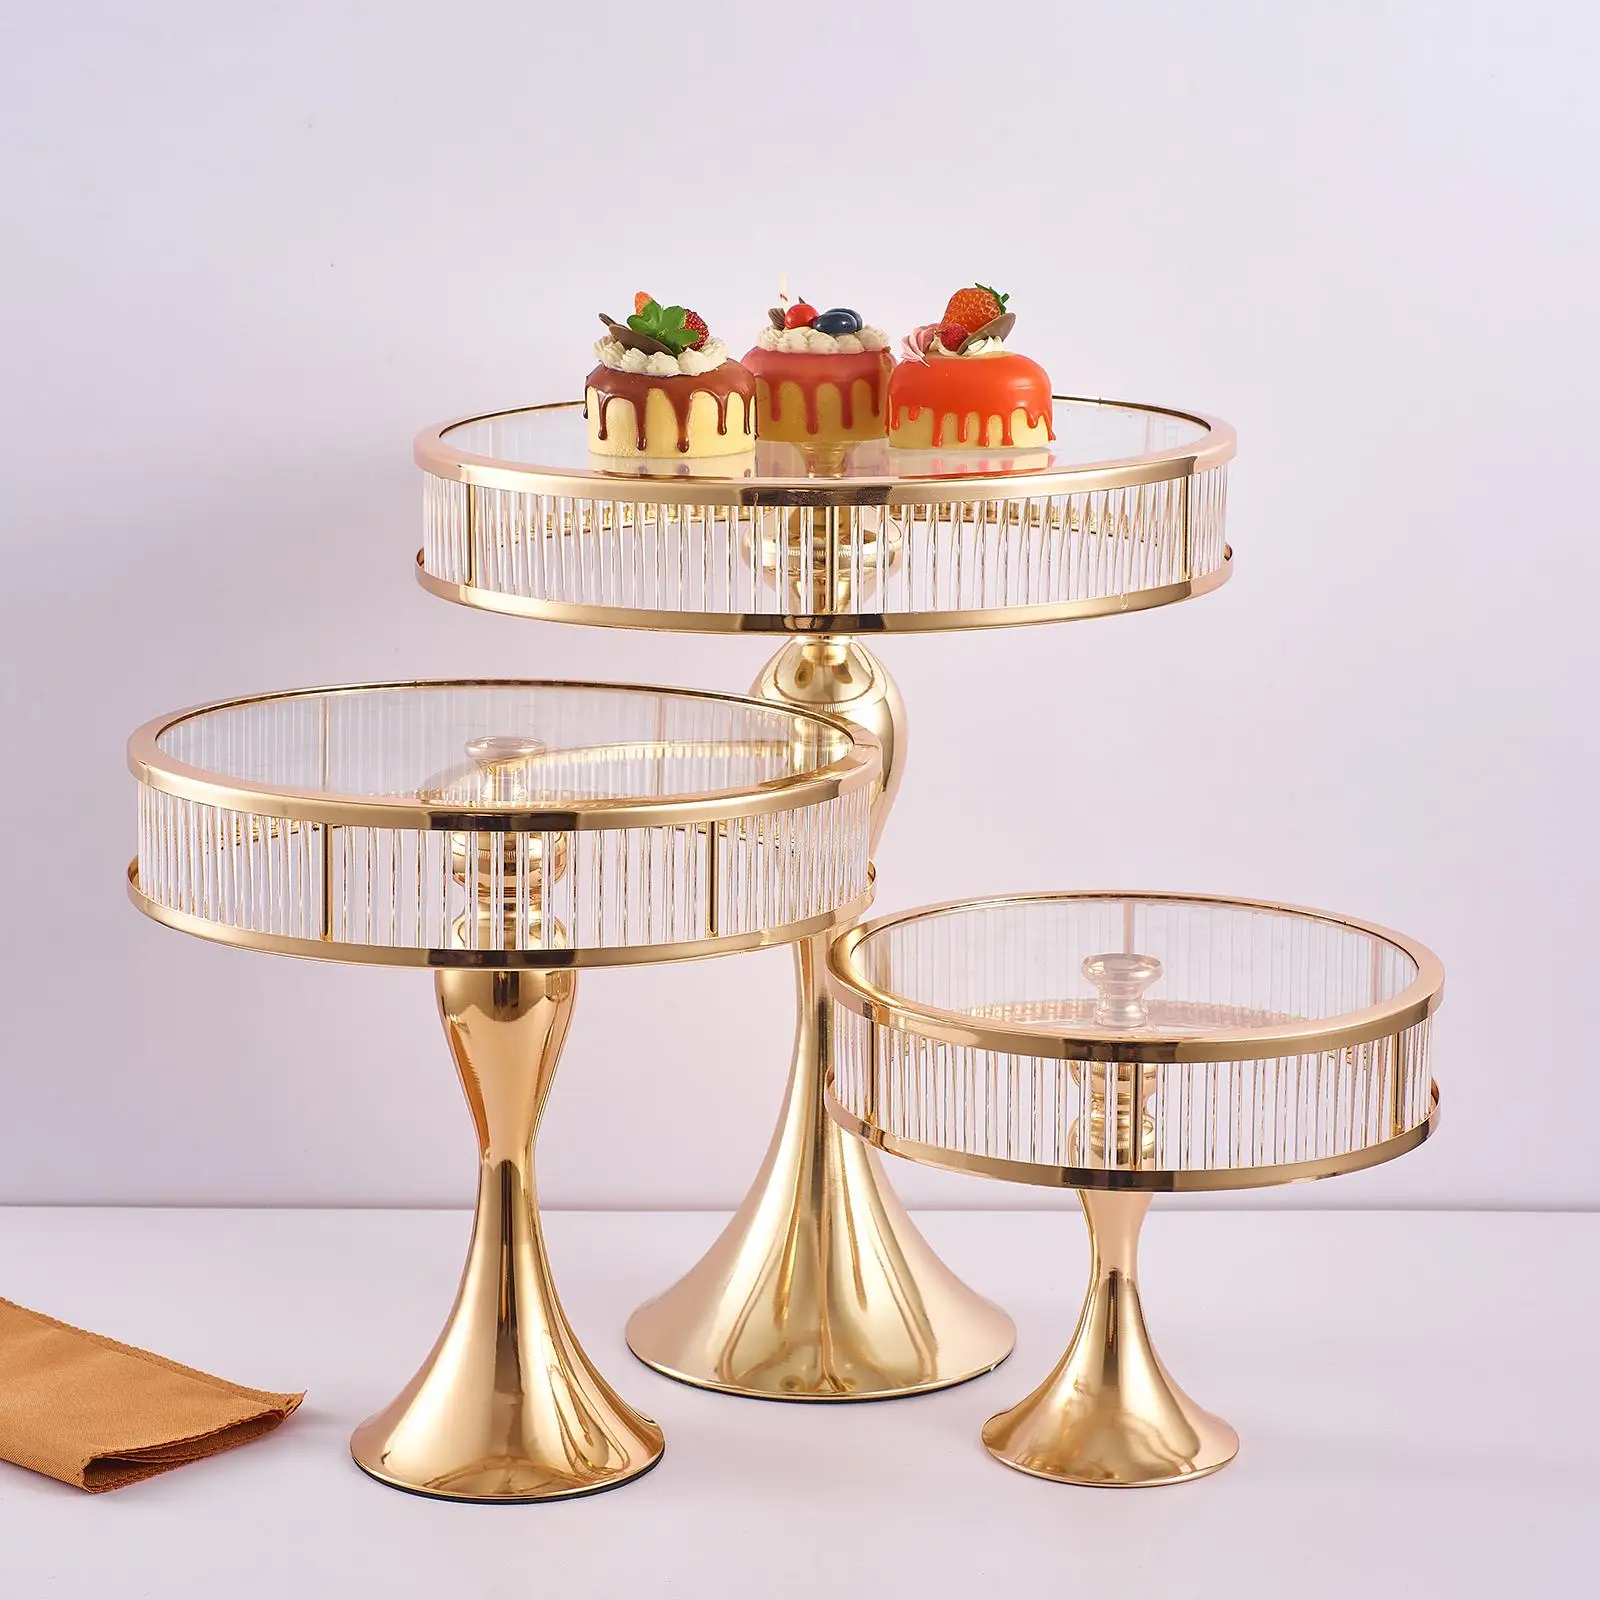 Gold Stand Vegetable Holder Light Luxury Cosmetics Storage Reusable Serving Tray for Fruit Wedding Kitchen Dessert Display